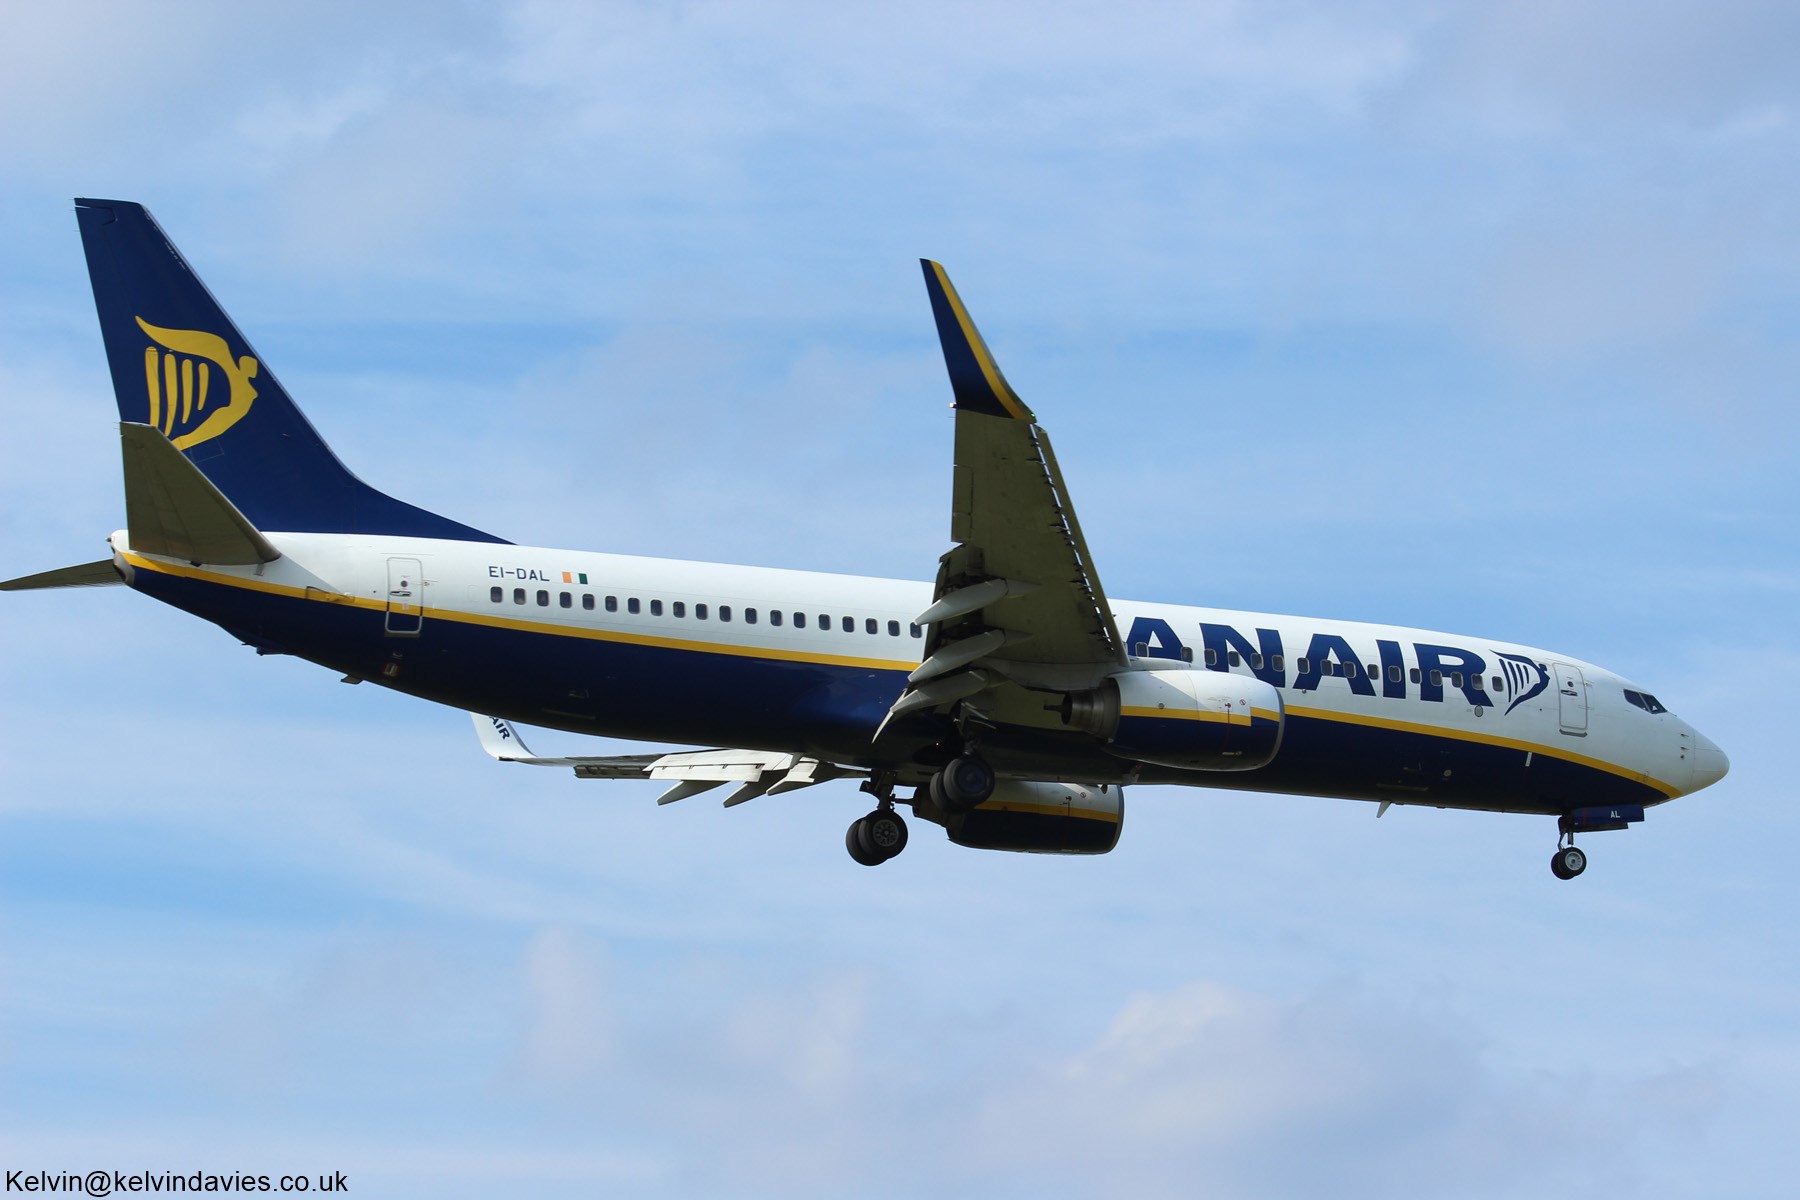 Ryanair 737 EI-DAL